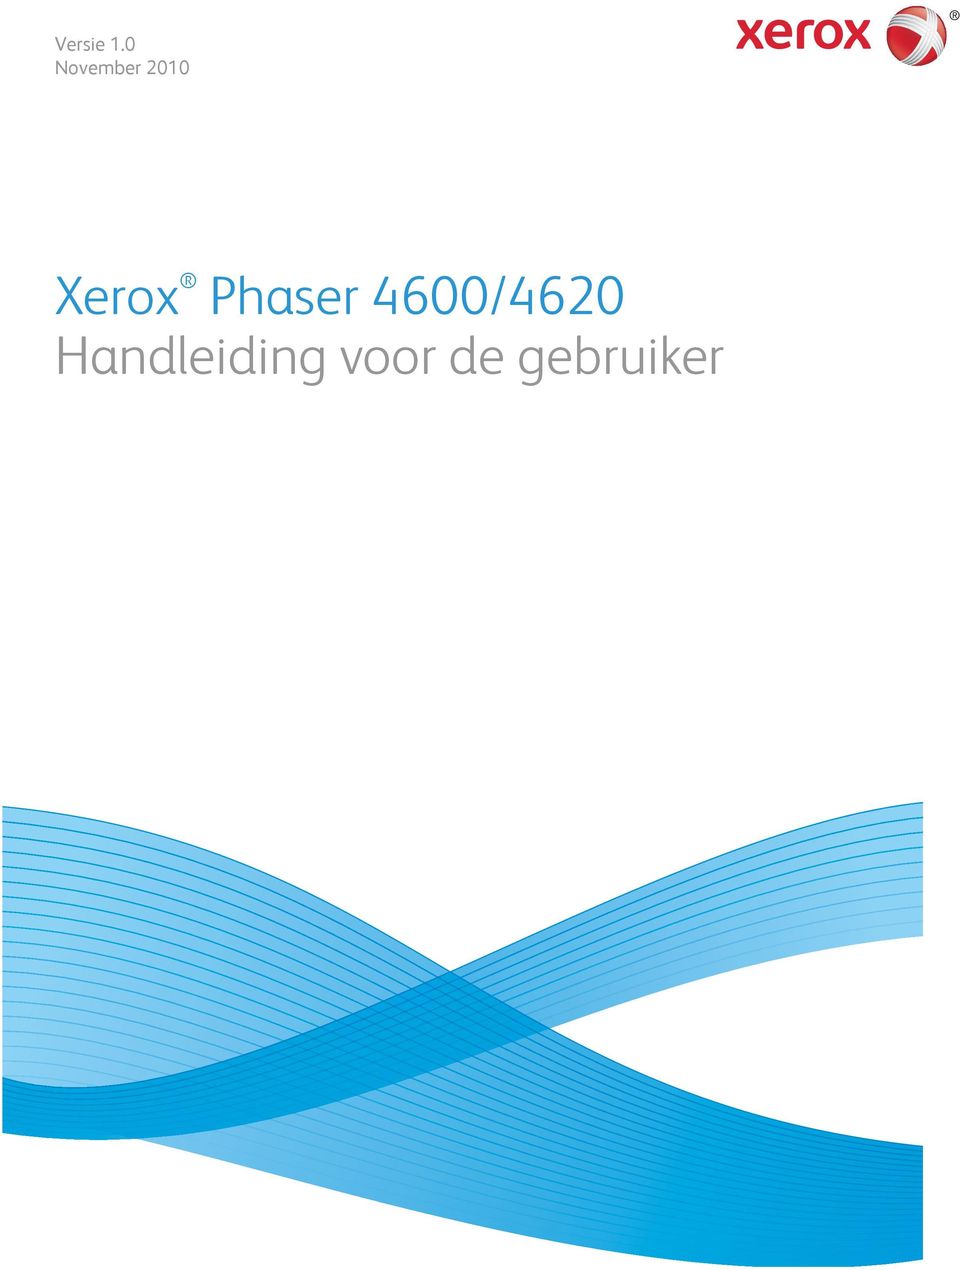 2010 Xerox